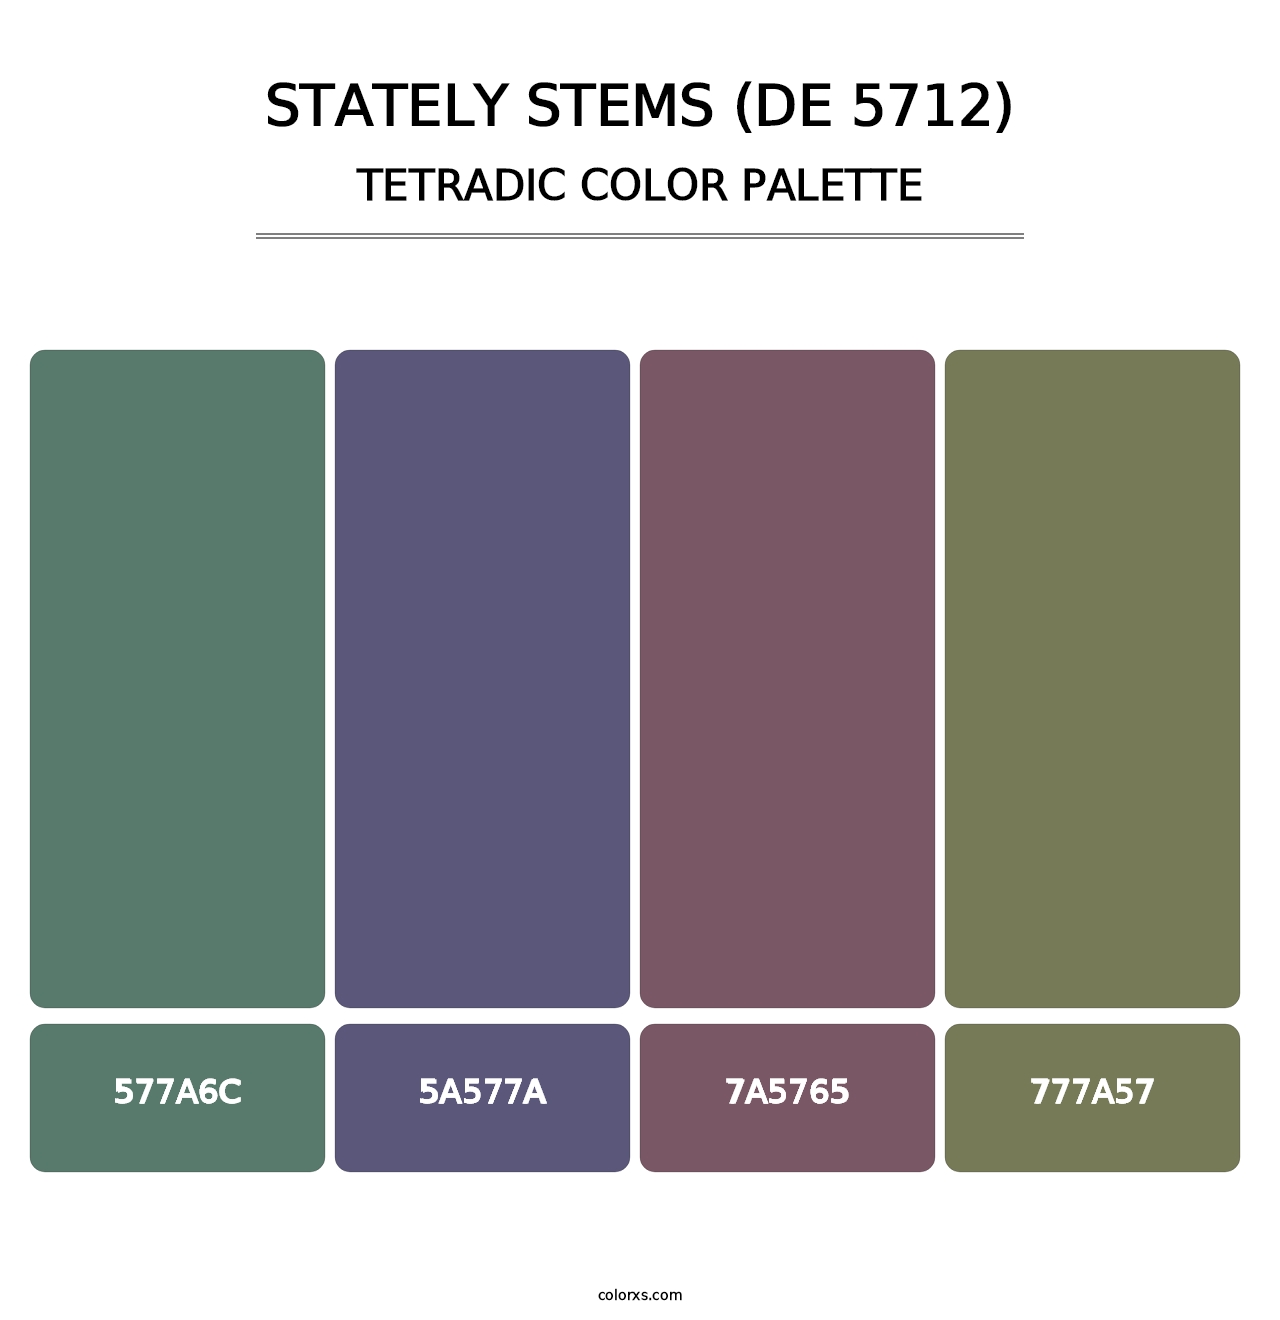 Stately Stems (DE 5712) - Tetradic Color Palette